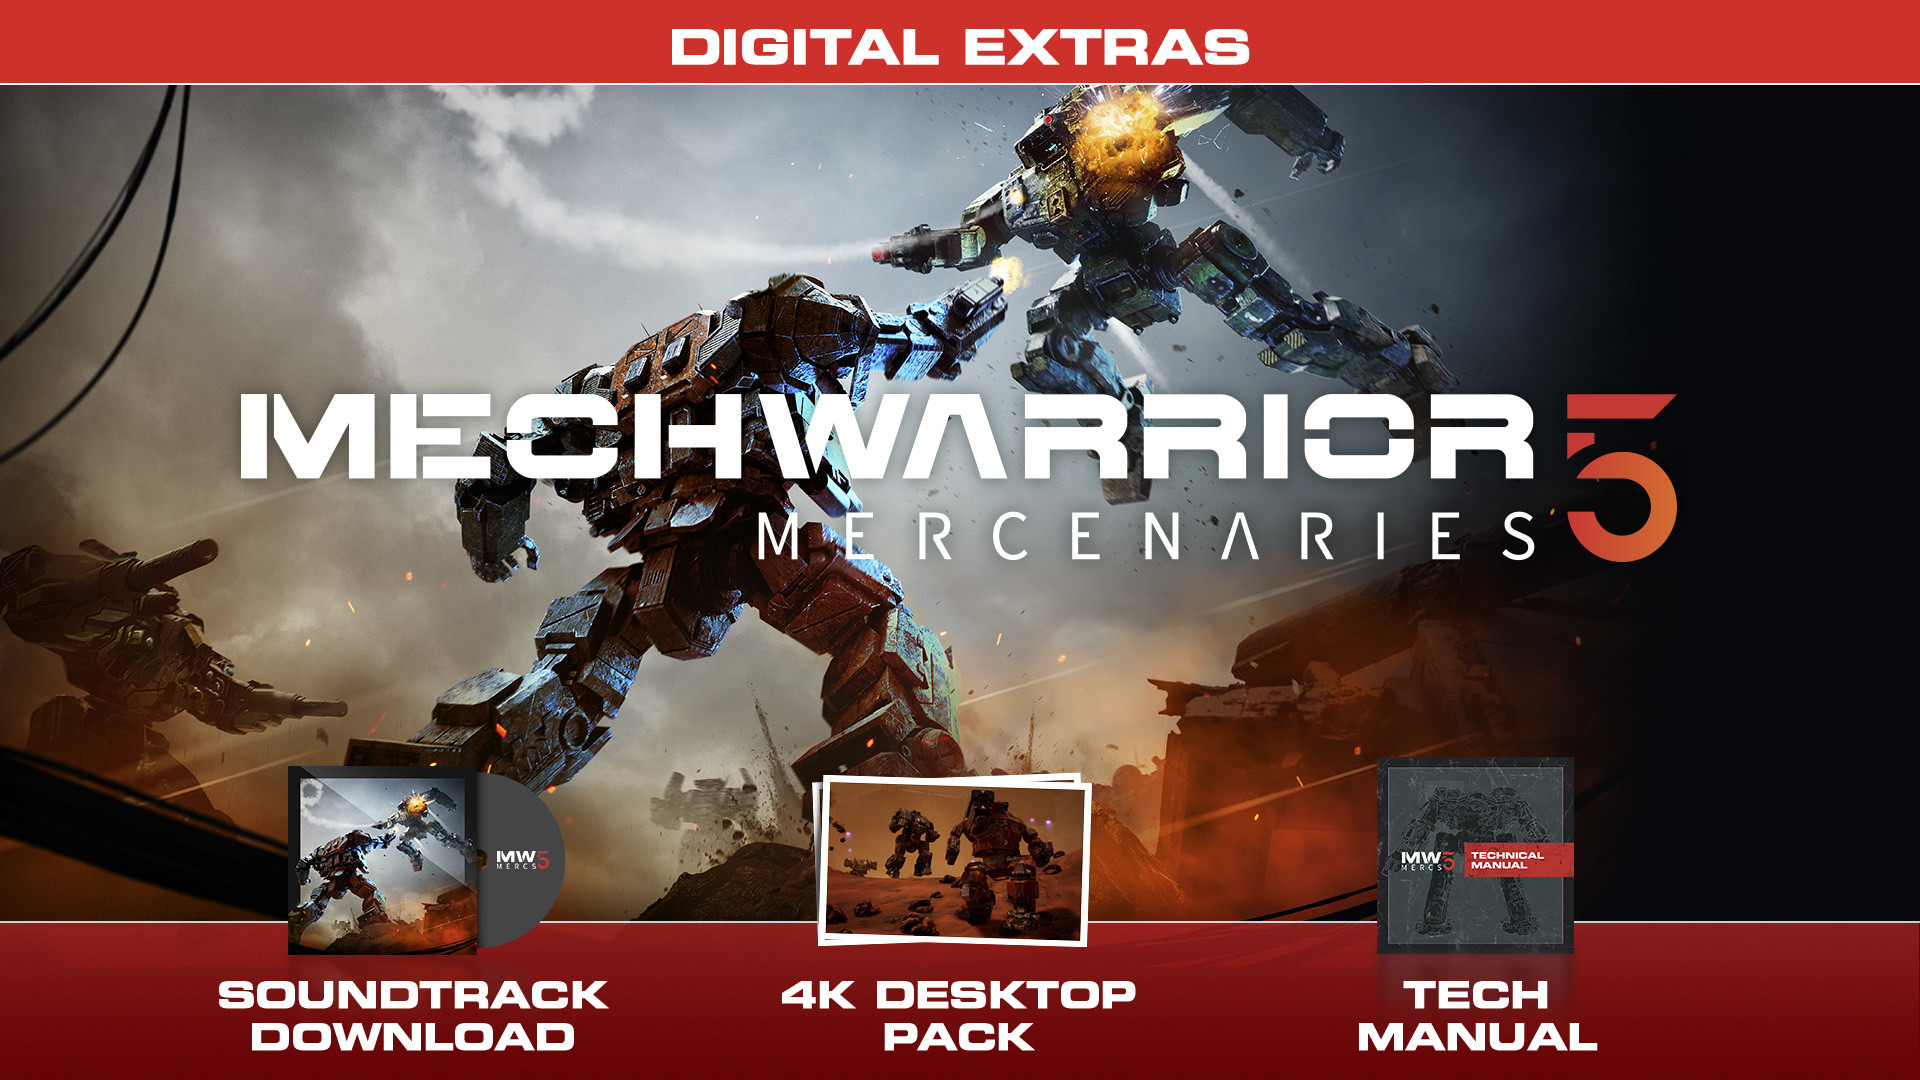 MechWarrior 5: Mercenaries - Digital Extras Content DLC Steam CD Key 7.89 usd